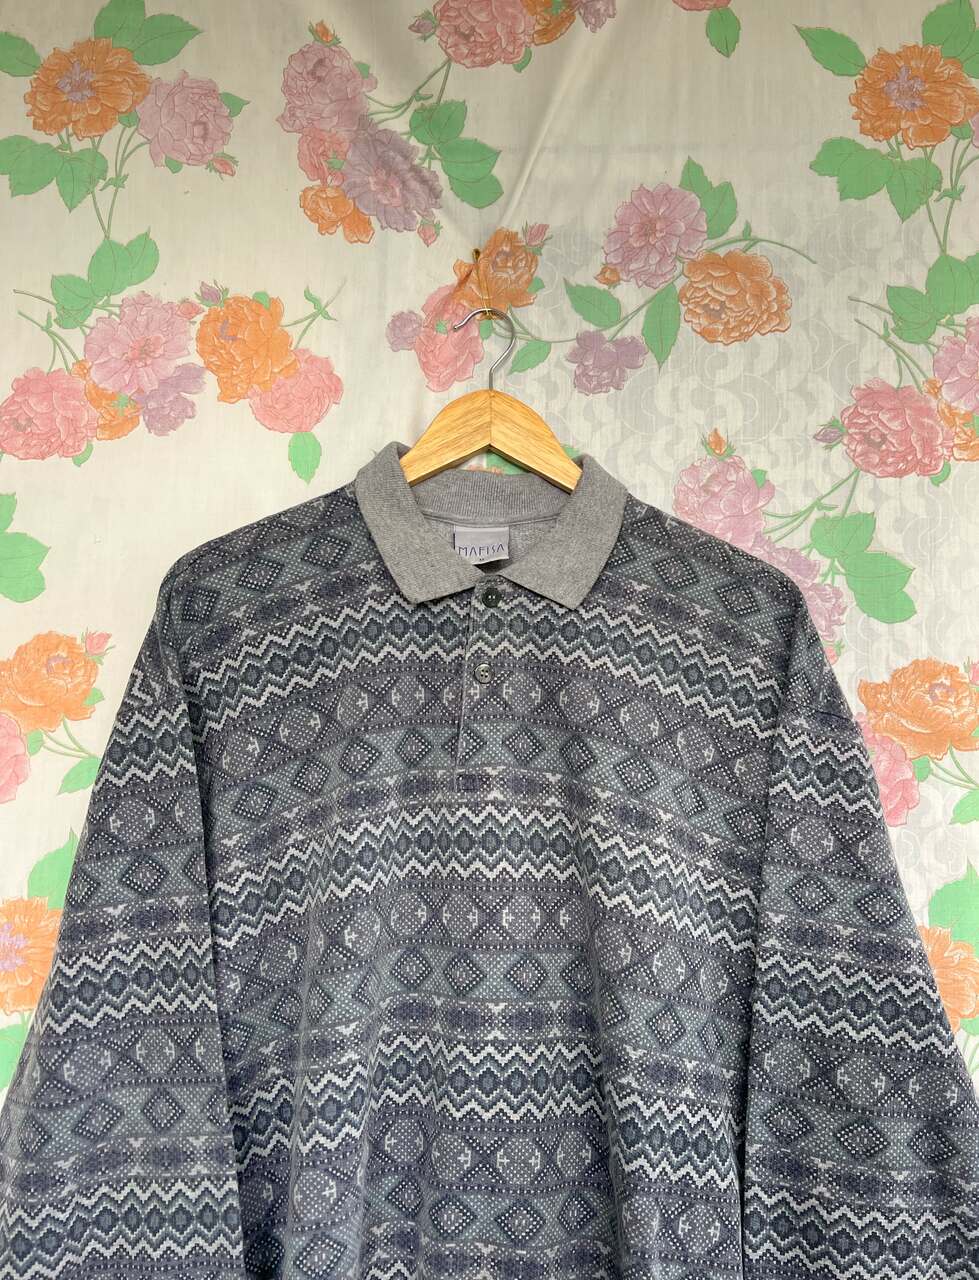 90's Ethnic Polo Sweater